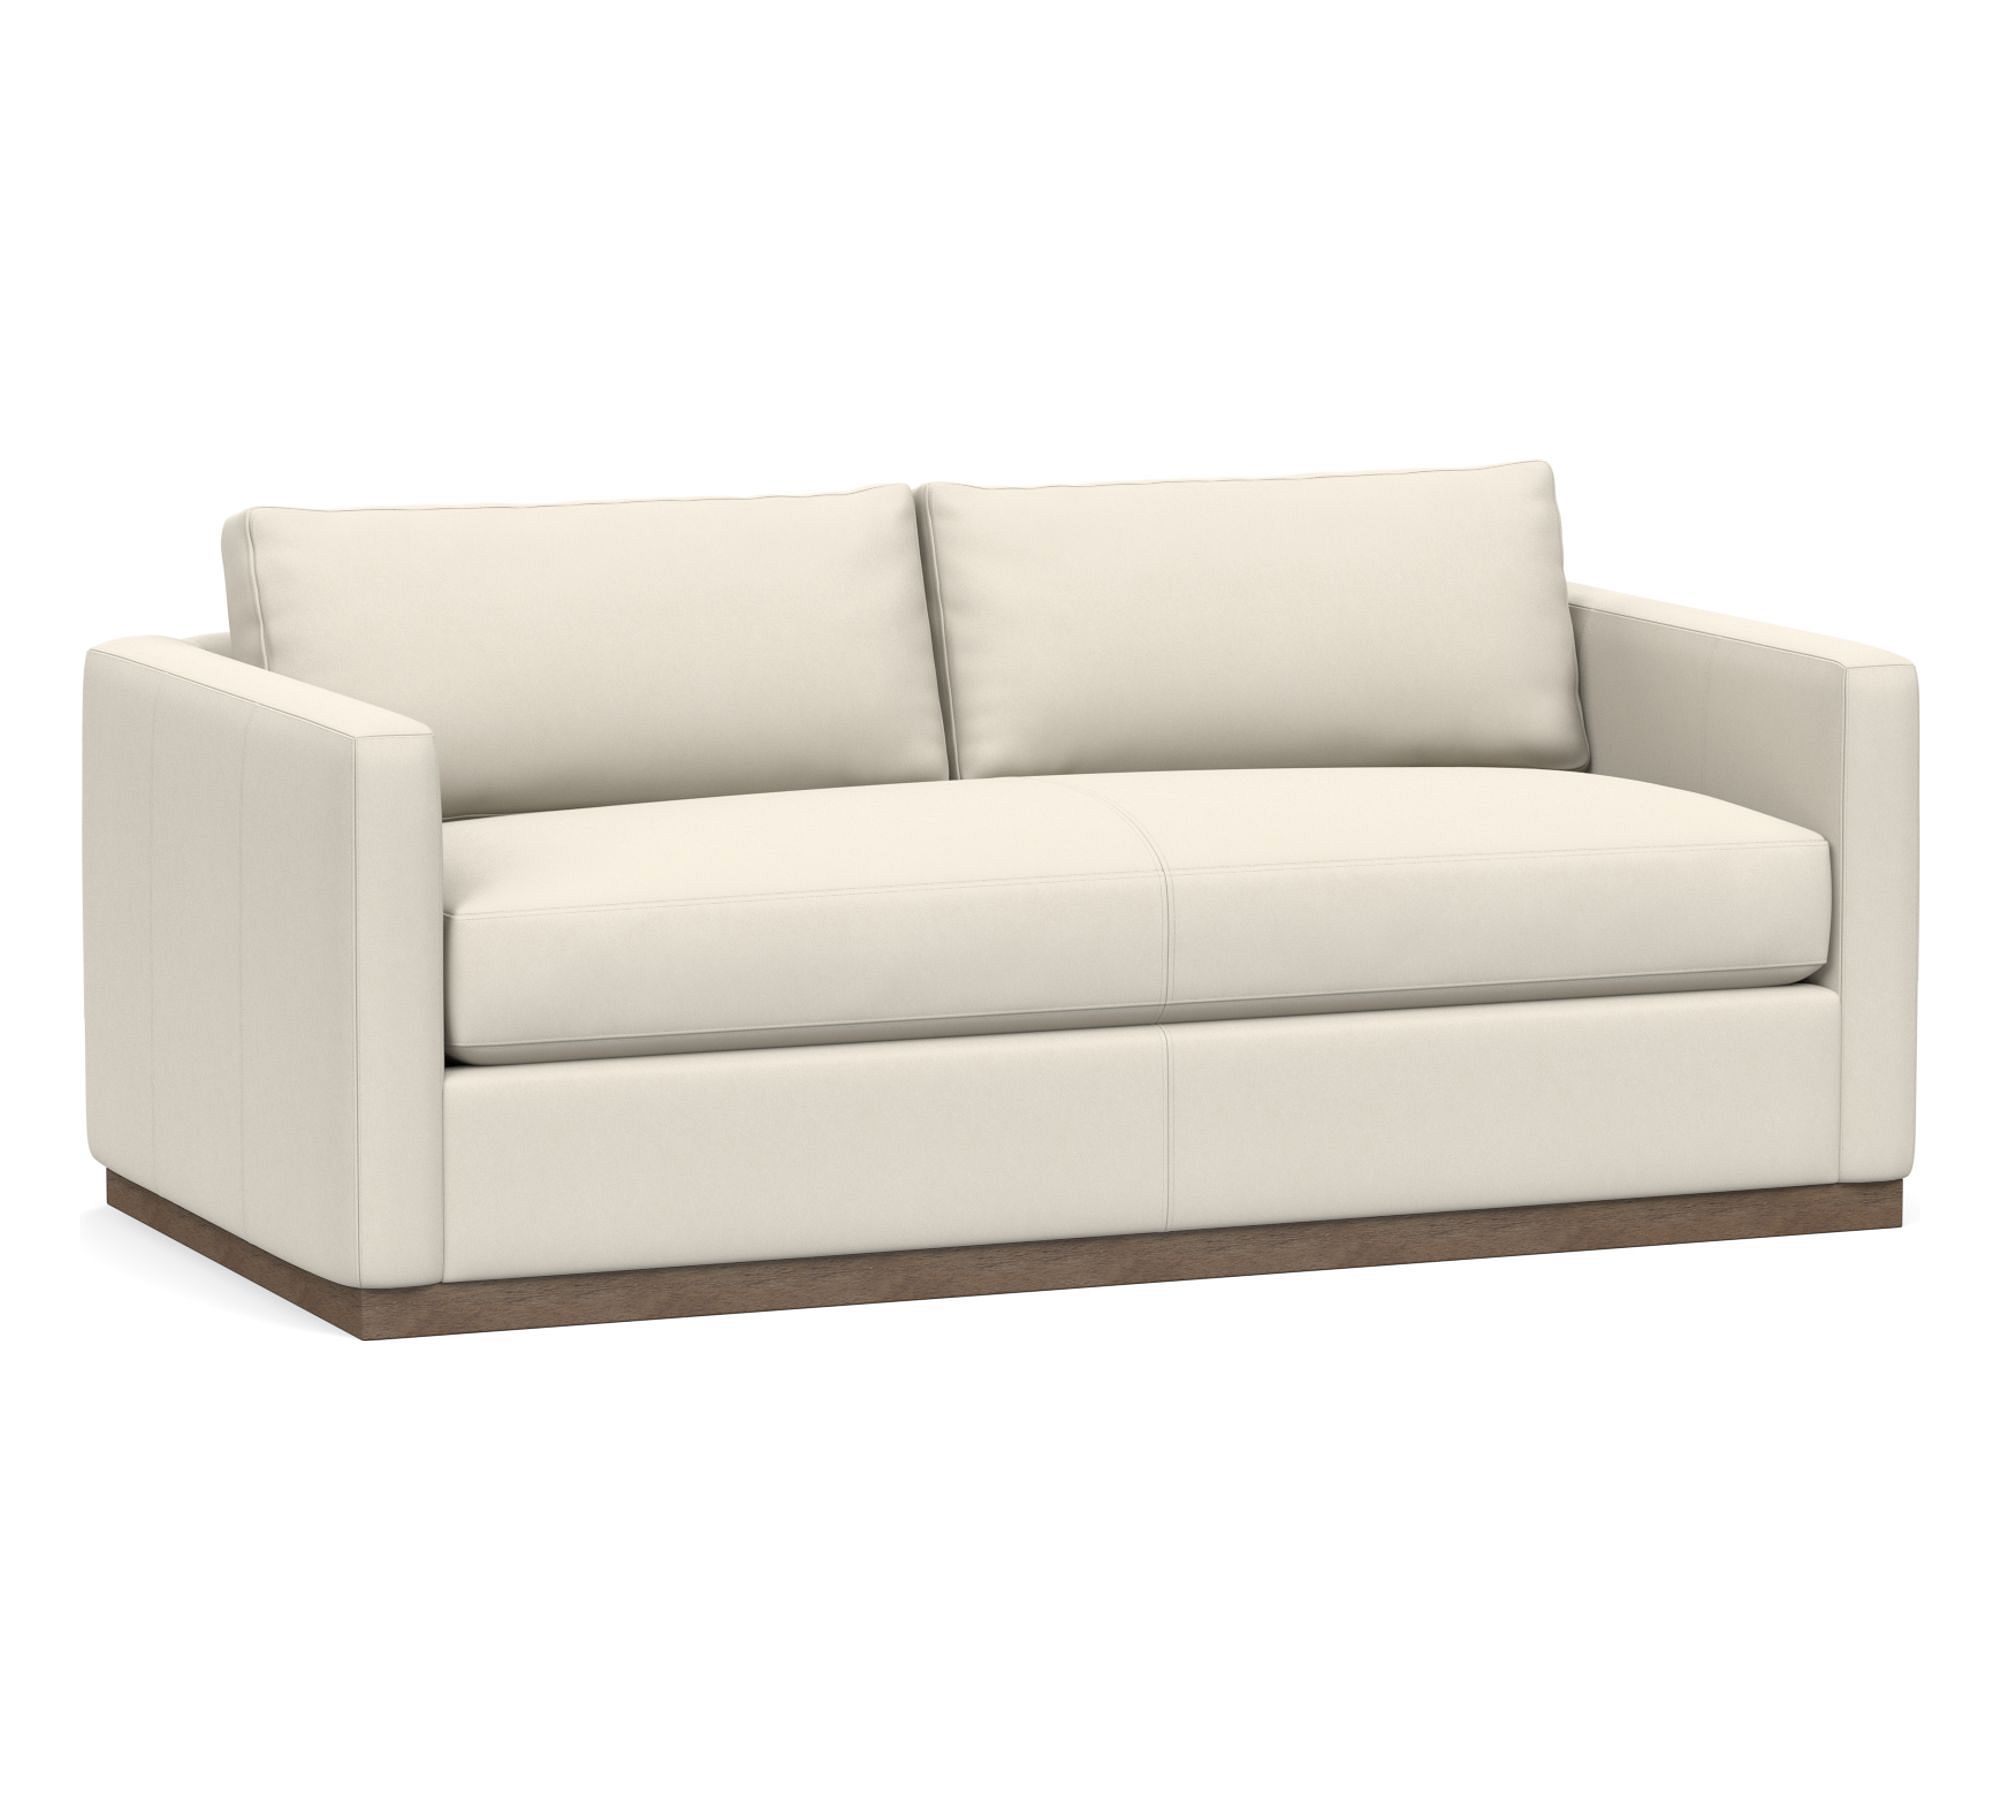 Carmel Slim Arm Leather Wood Base Sleeper Sofa (80")